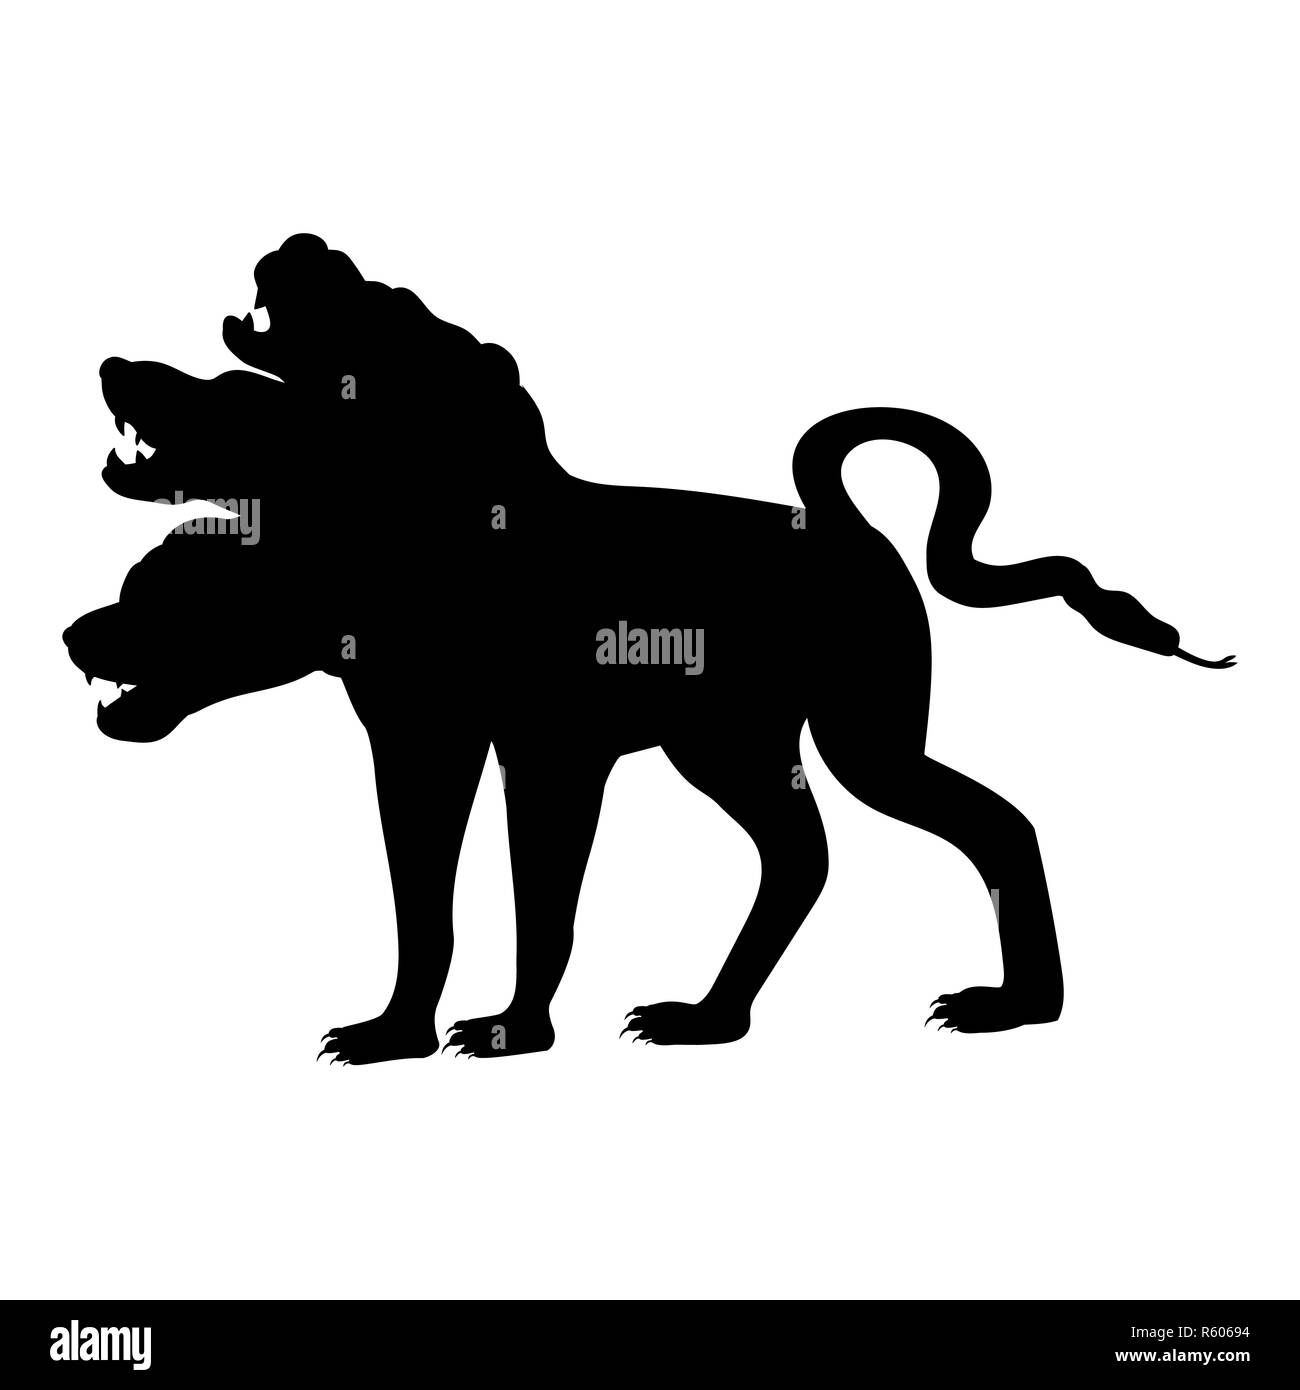 Cerberus dog silhouette ancient mythology fantasy Stock Photo